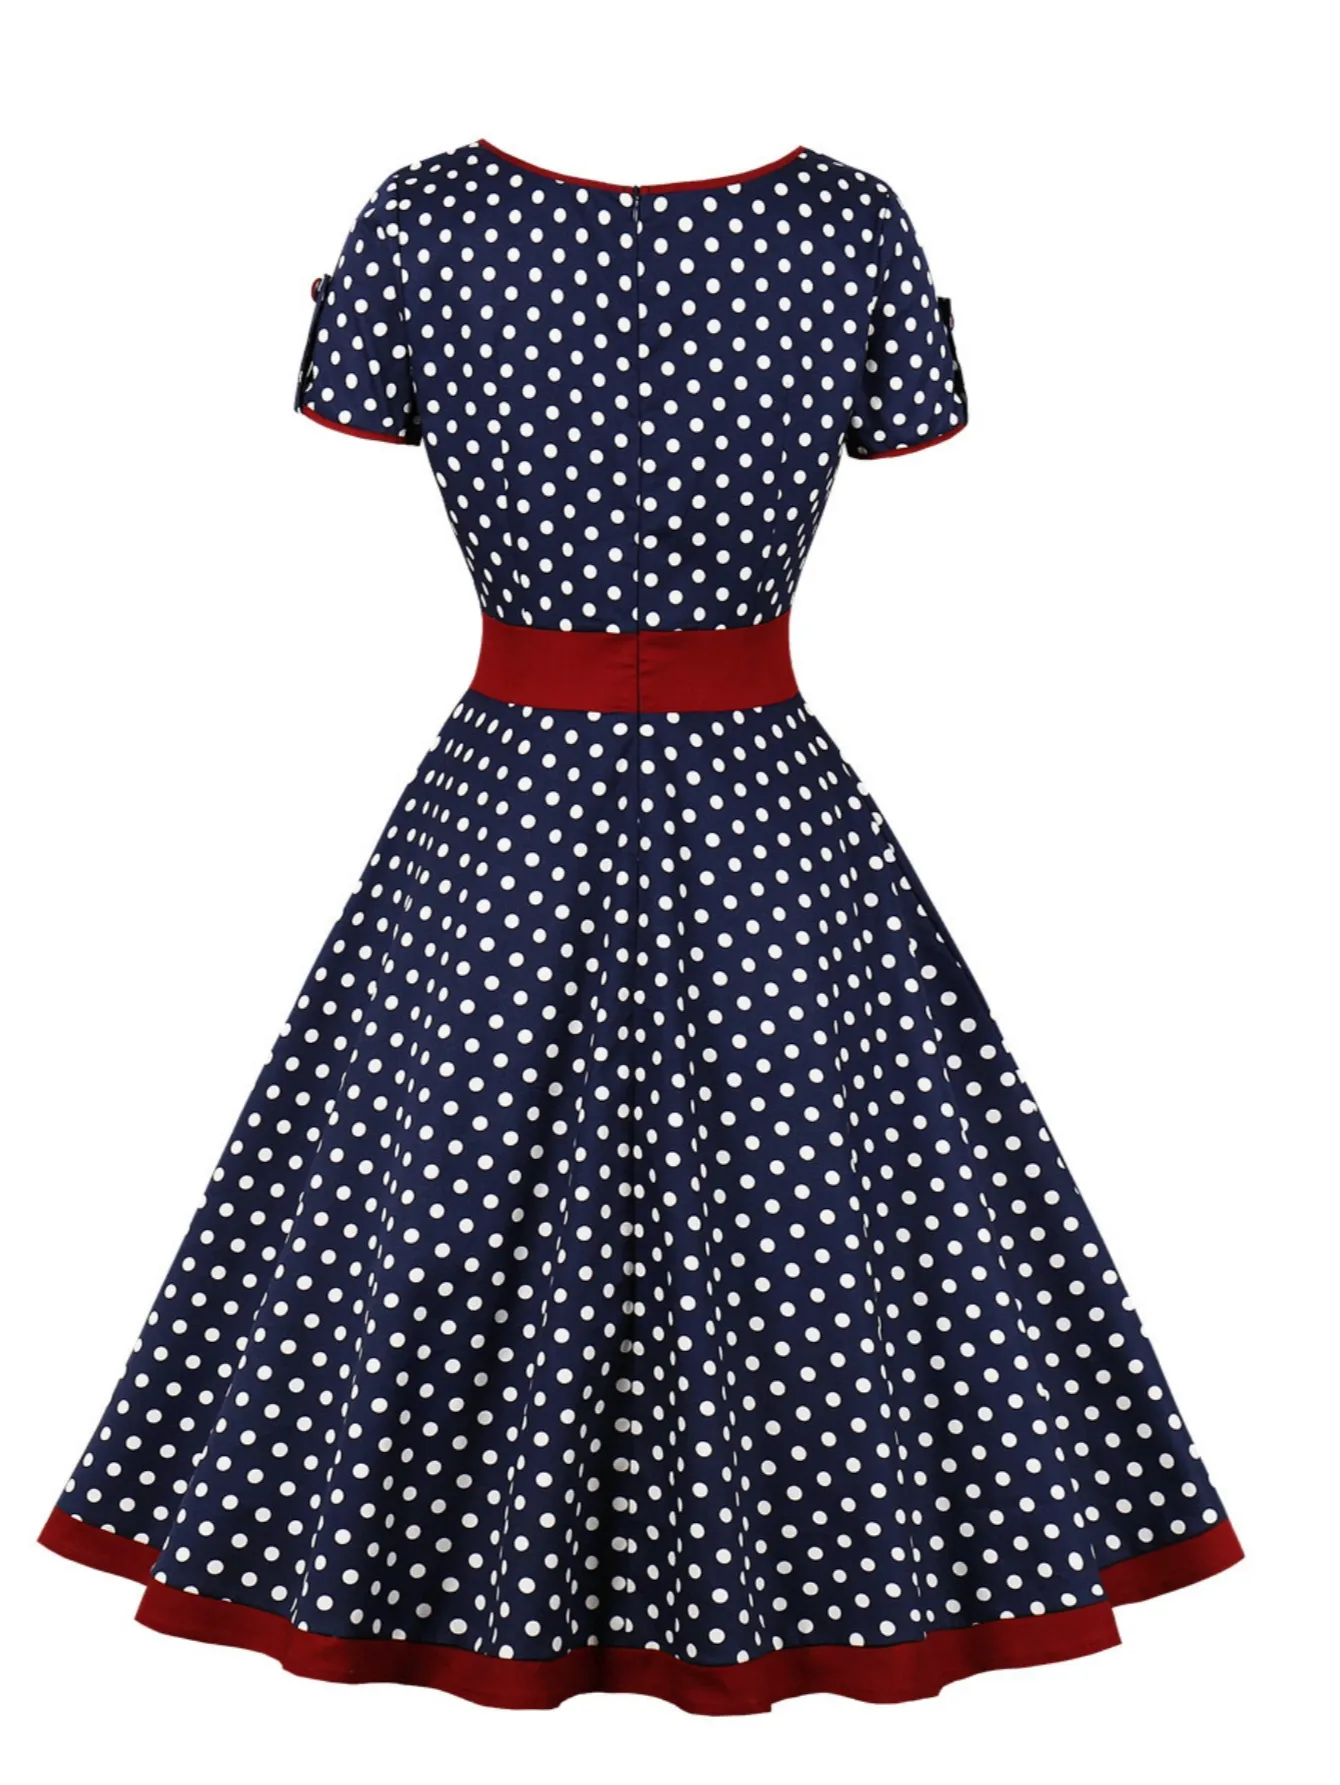 New vintage polka dot dress